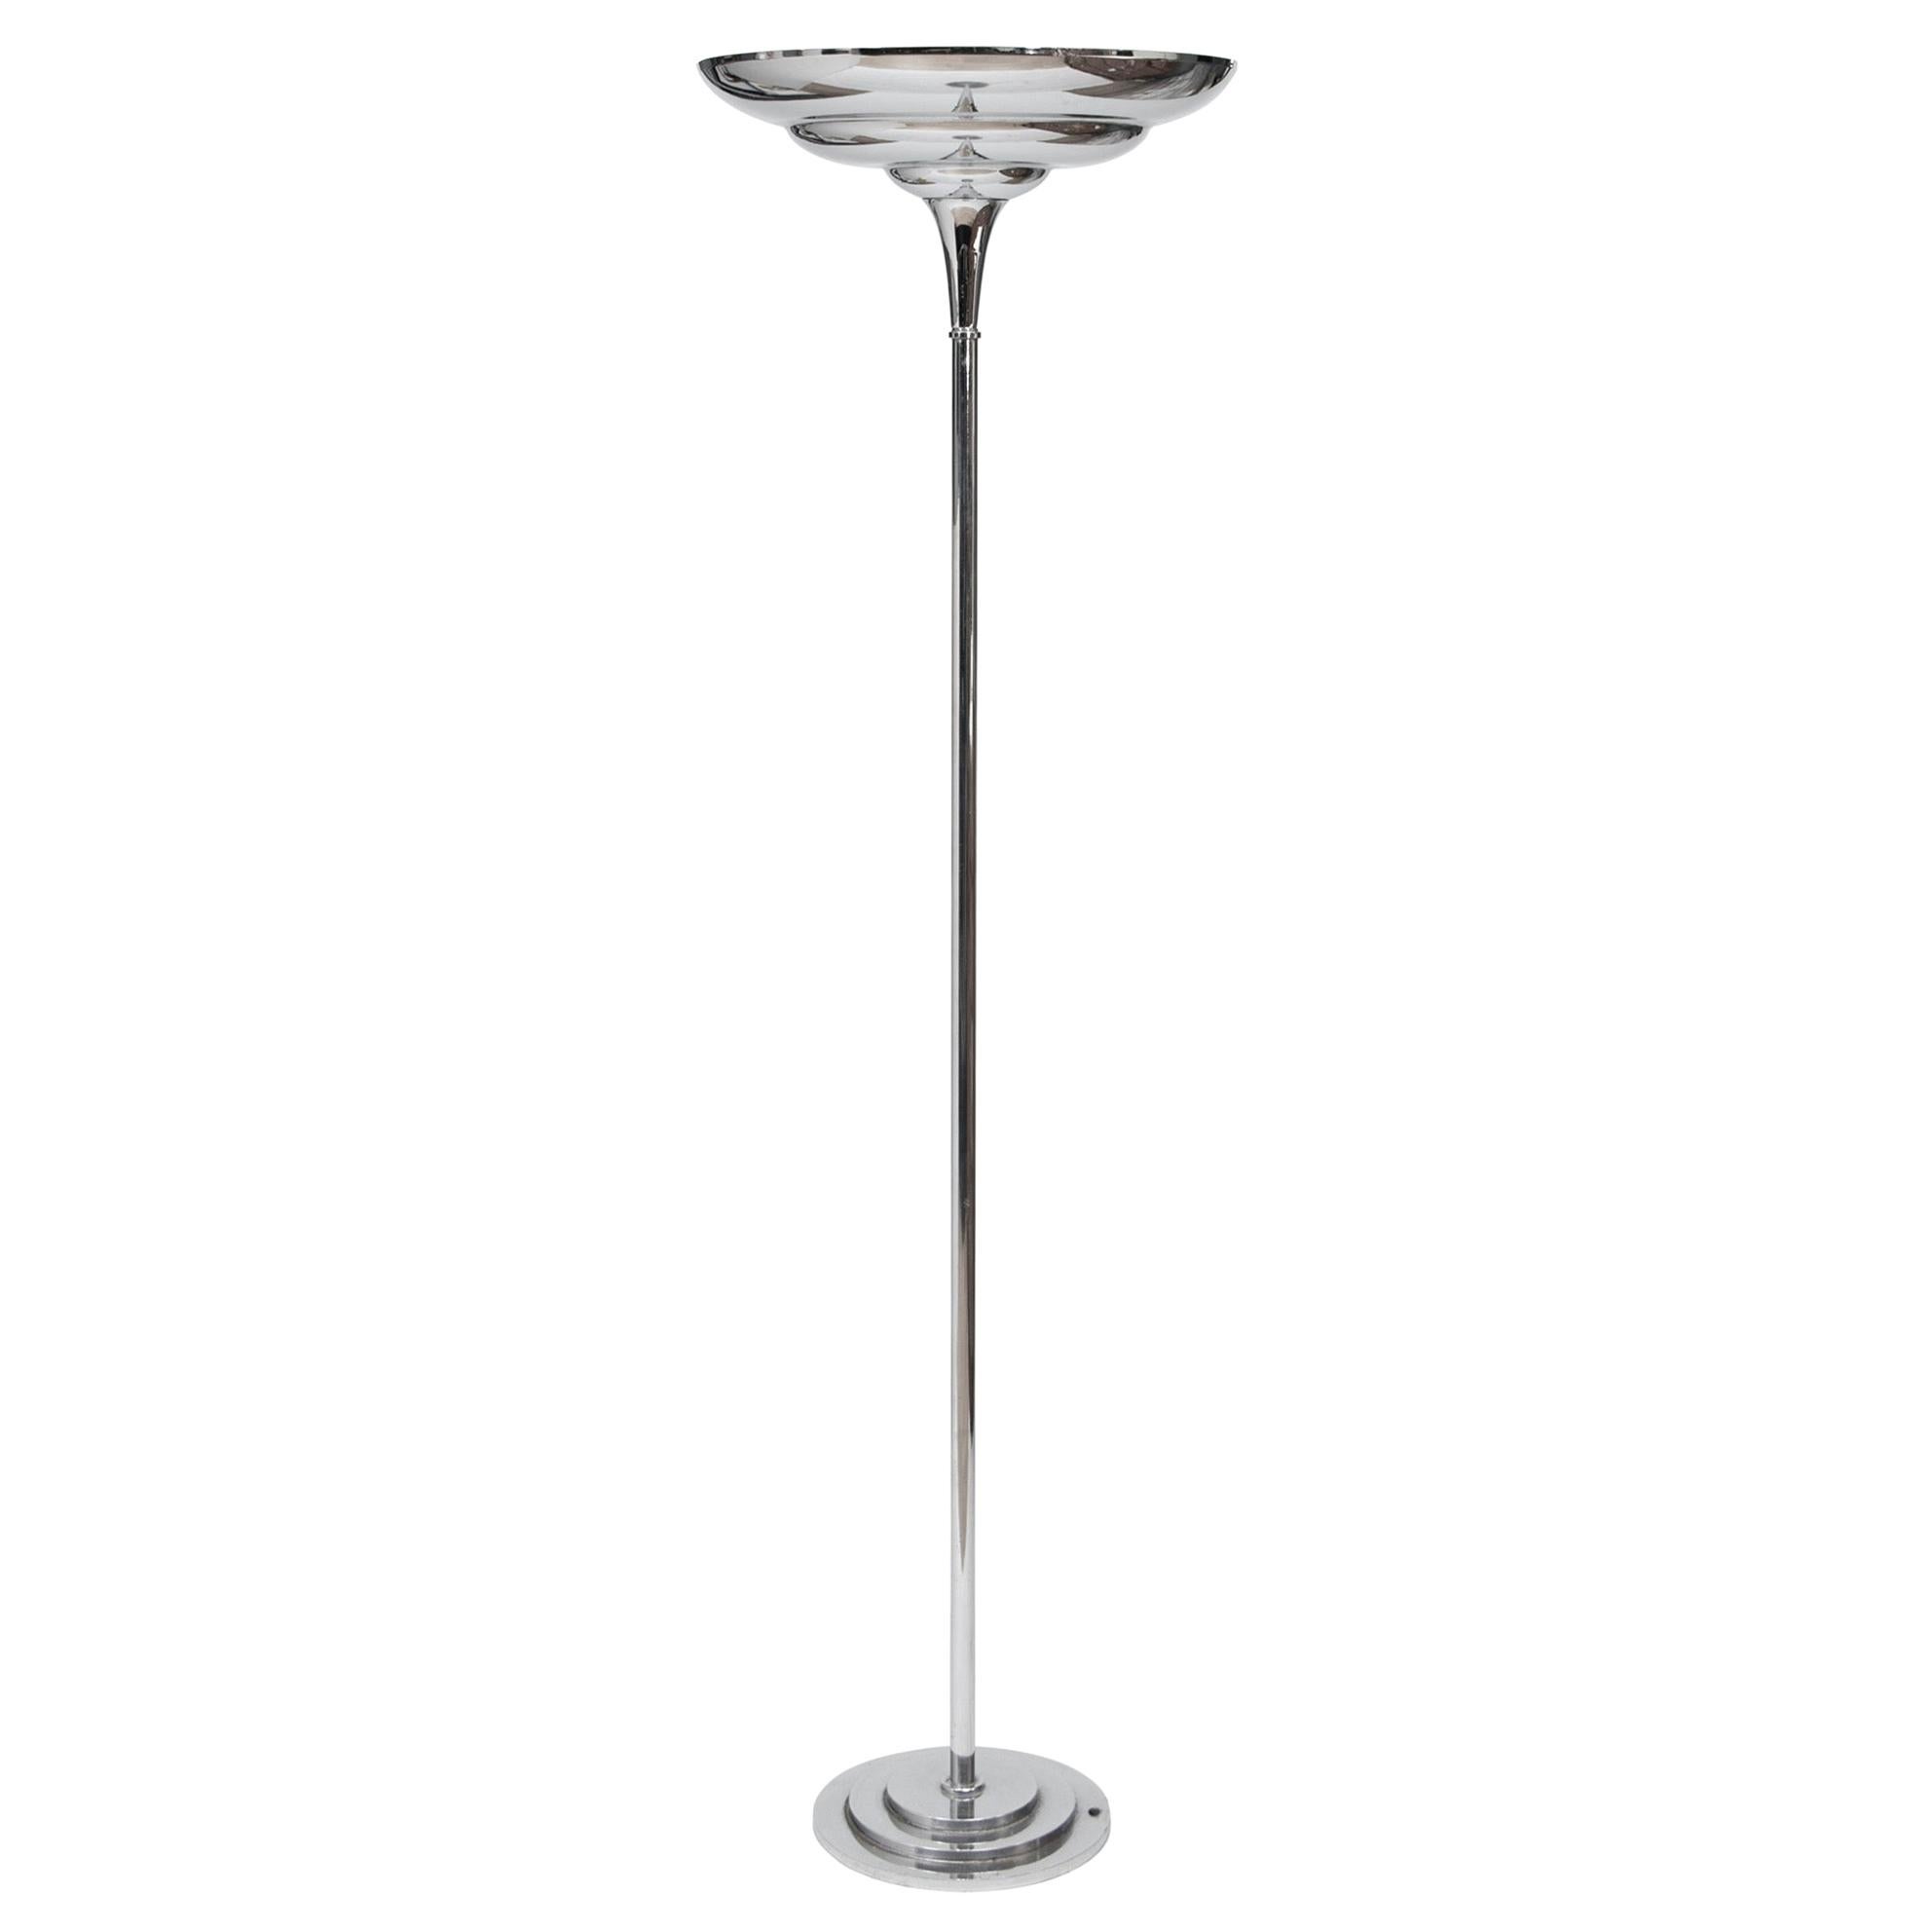 British Art Deco Floor Lamp Polished Chrome Uplighter For Sale